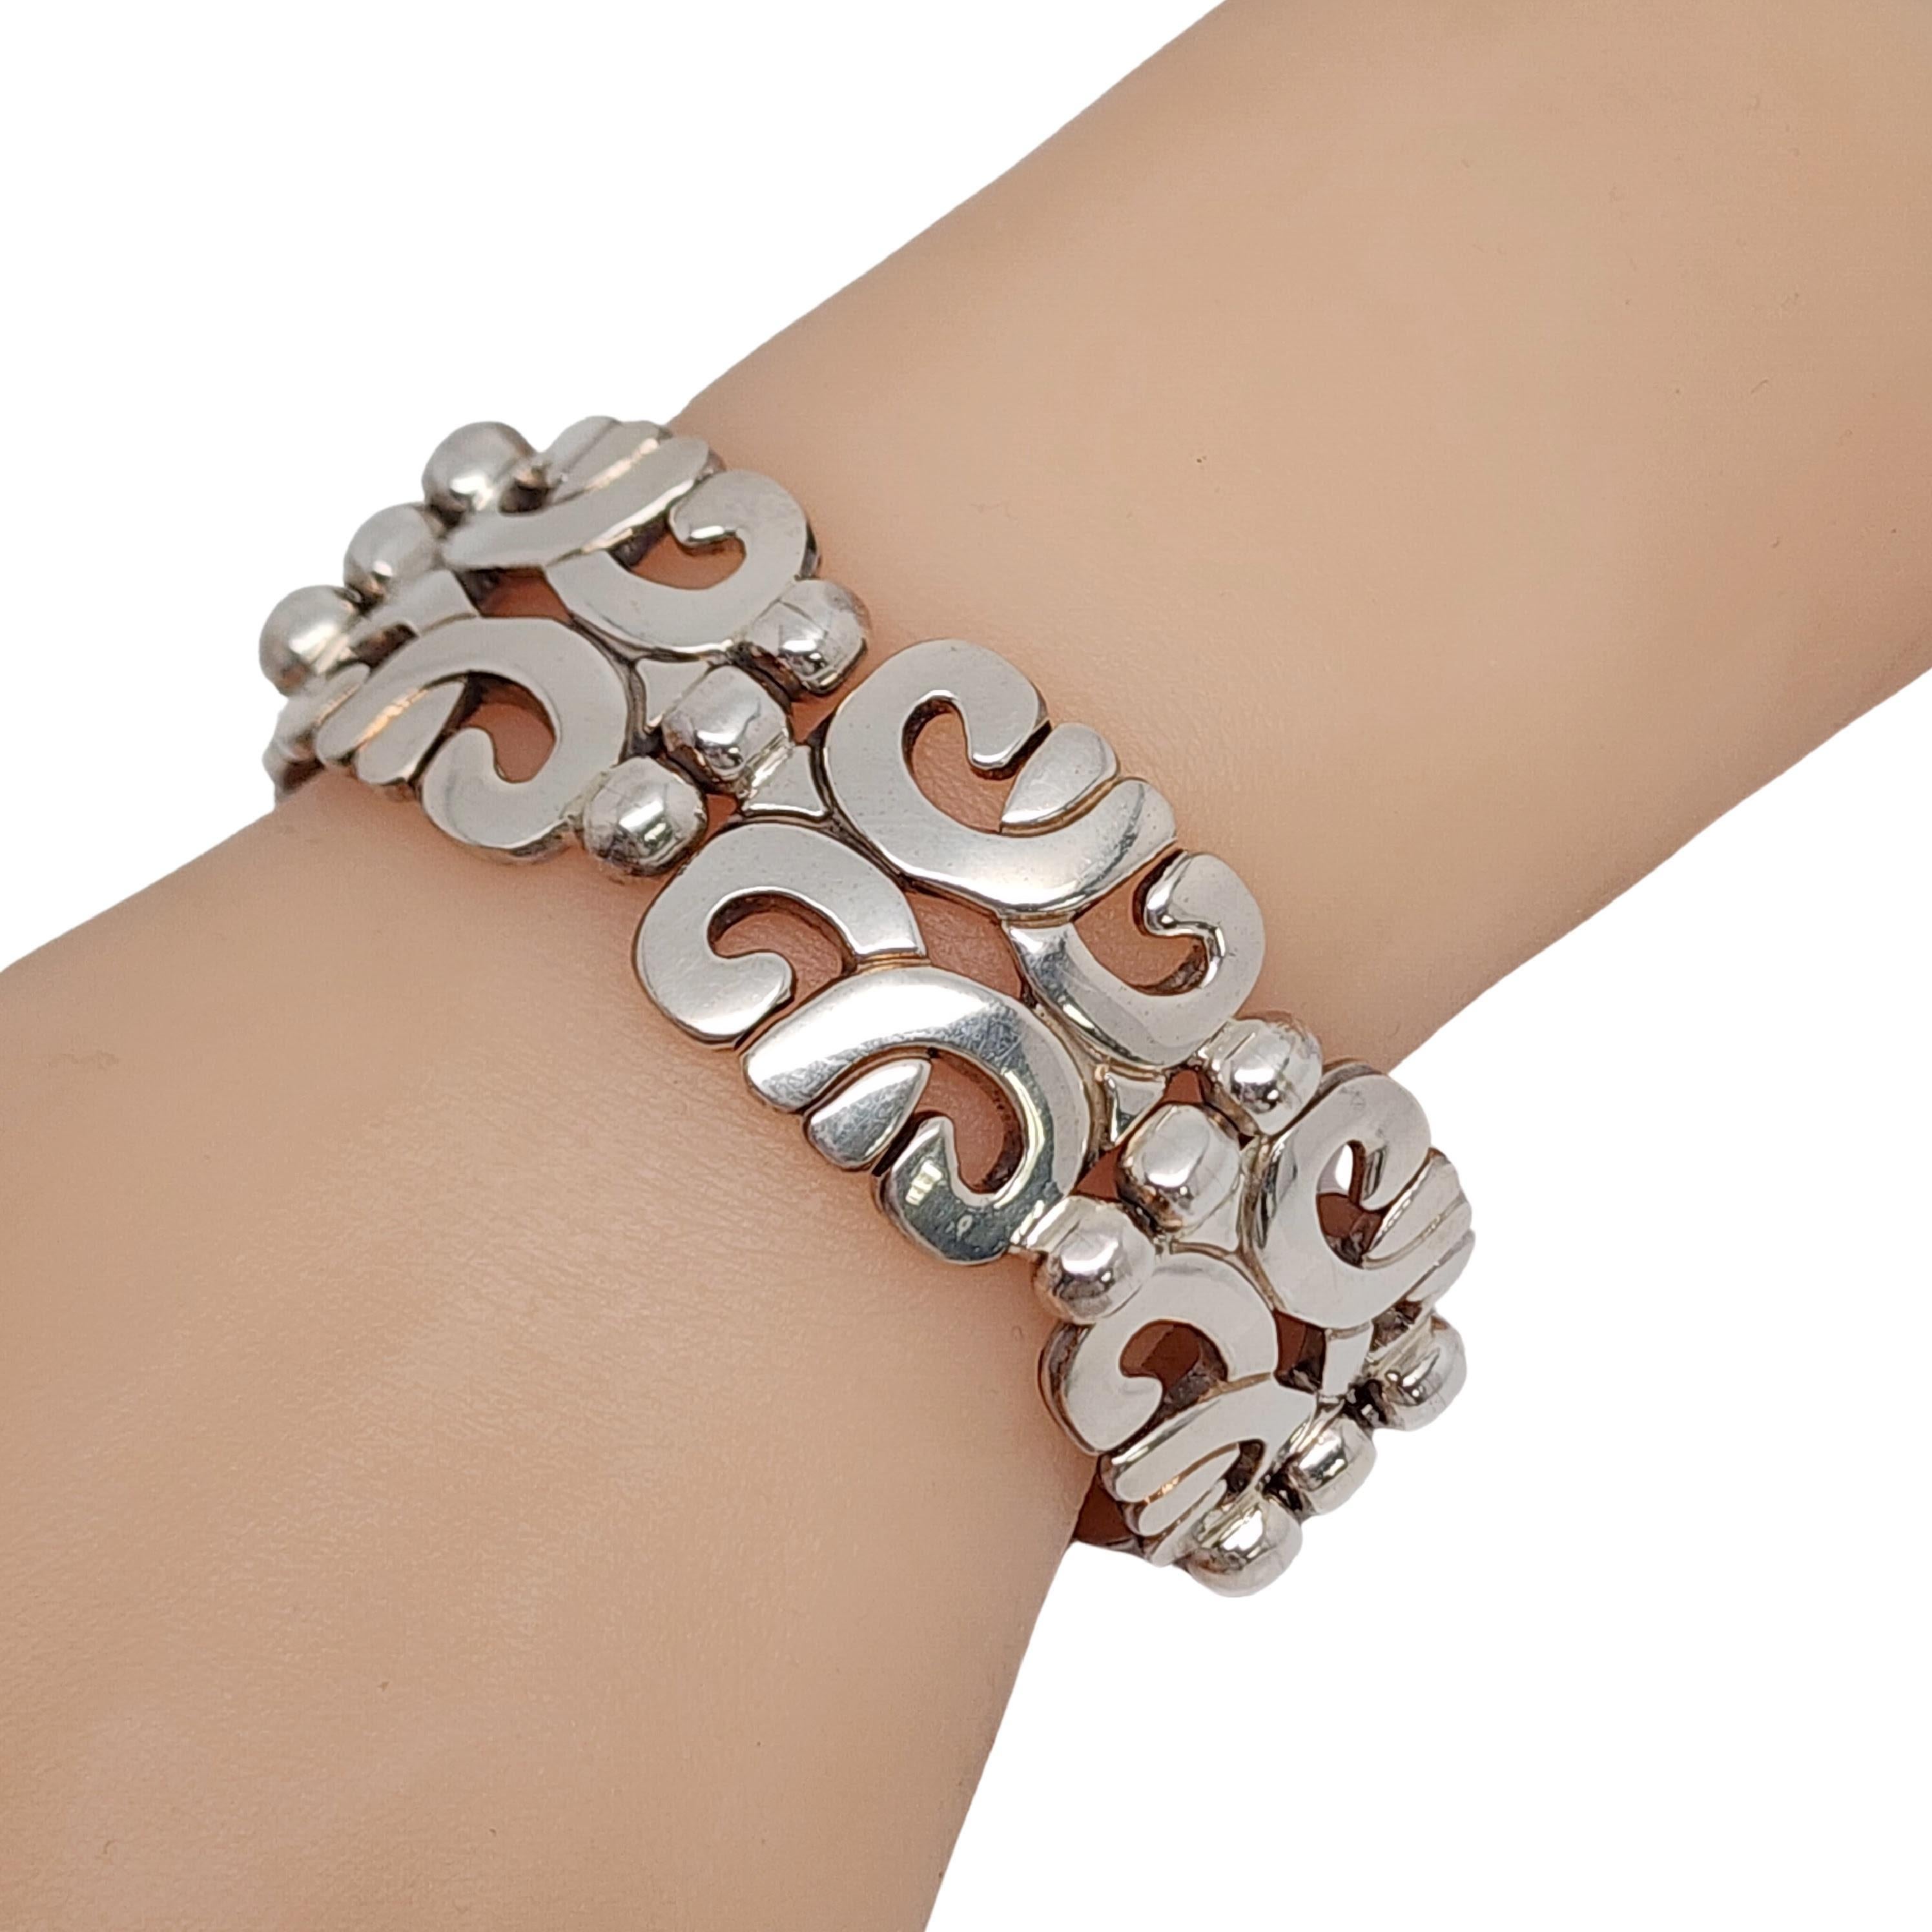 MWS Mexico Mark Wasserman Samara Sterling Silver Panel Link Bracelet #16441 For Sale 1